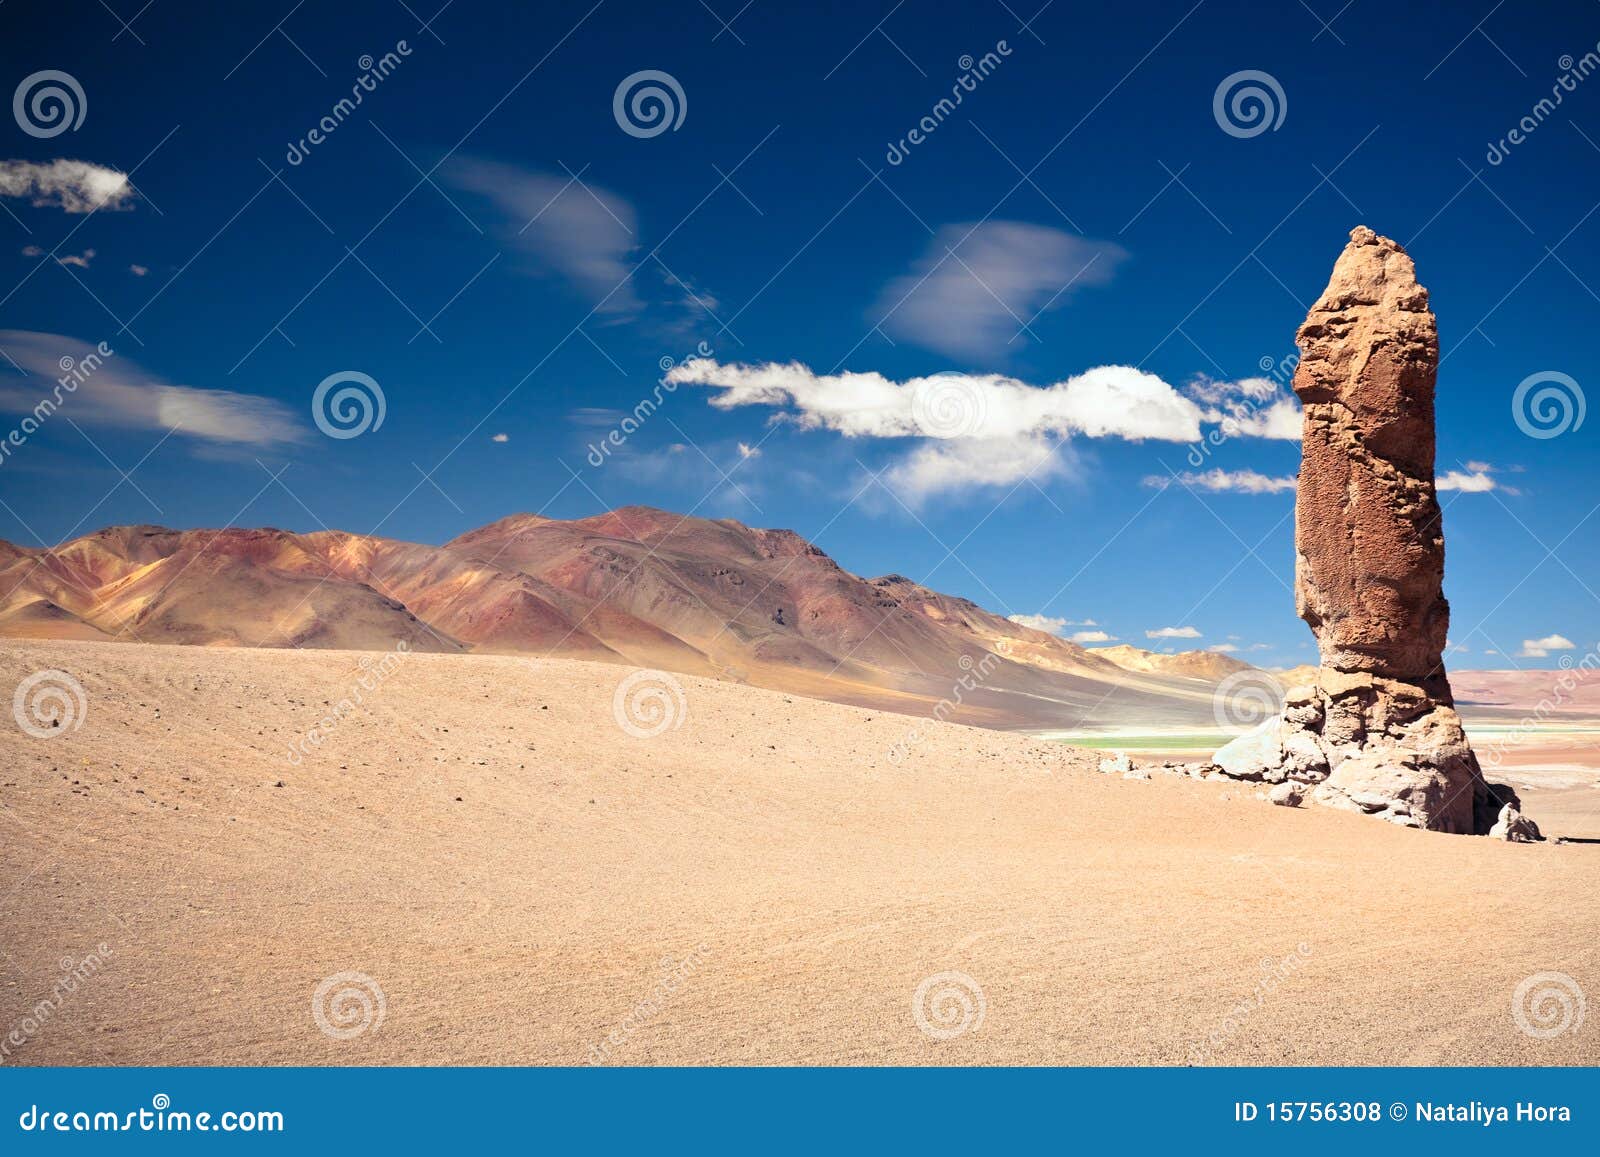 geological monolith near salar de tara, chile